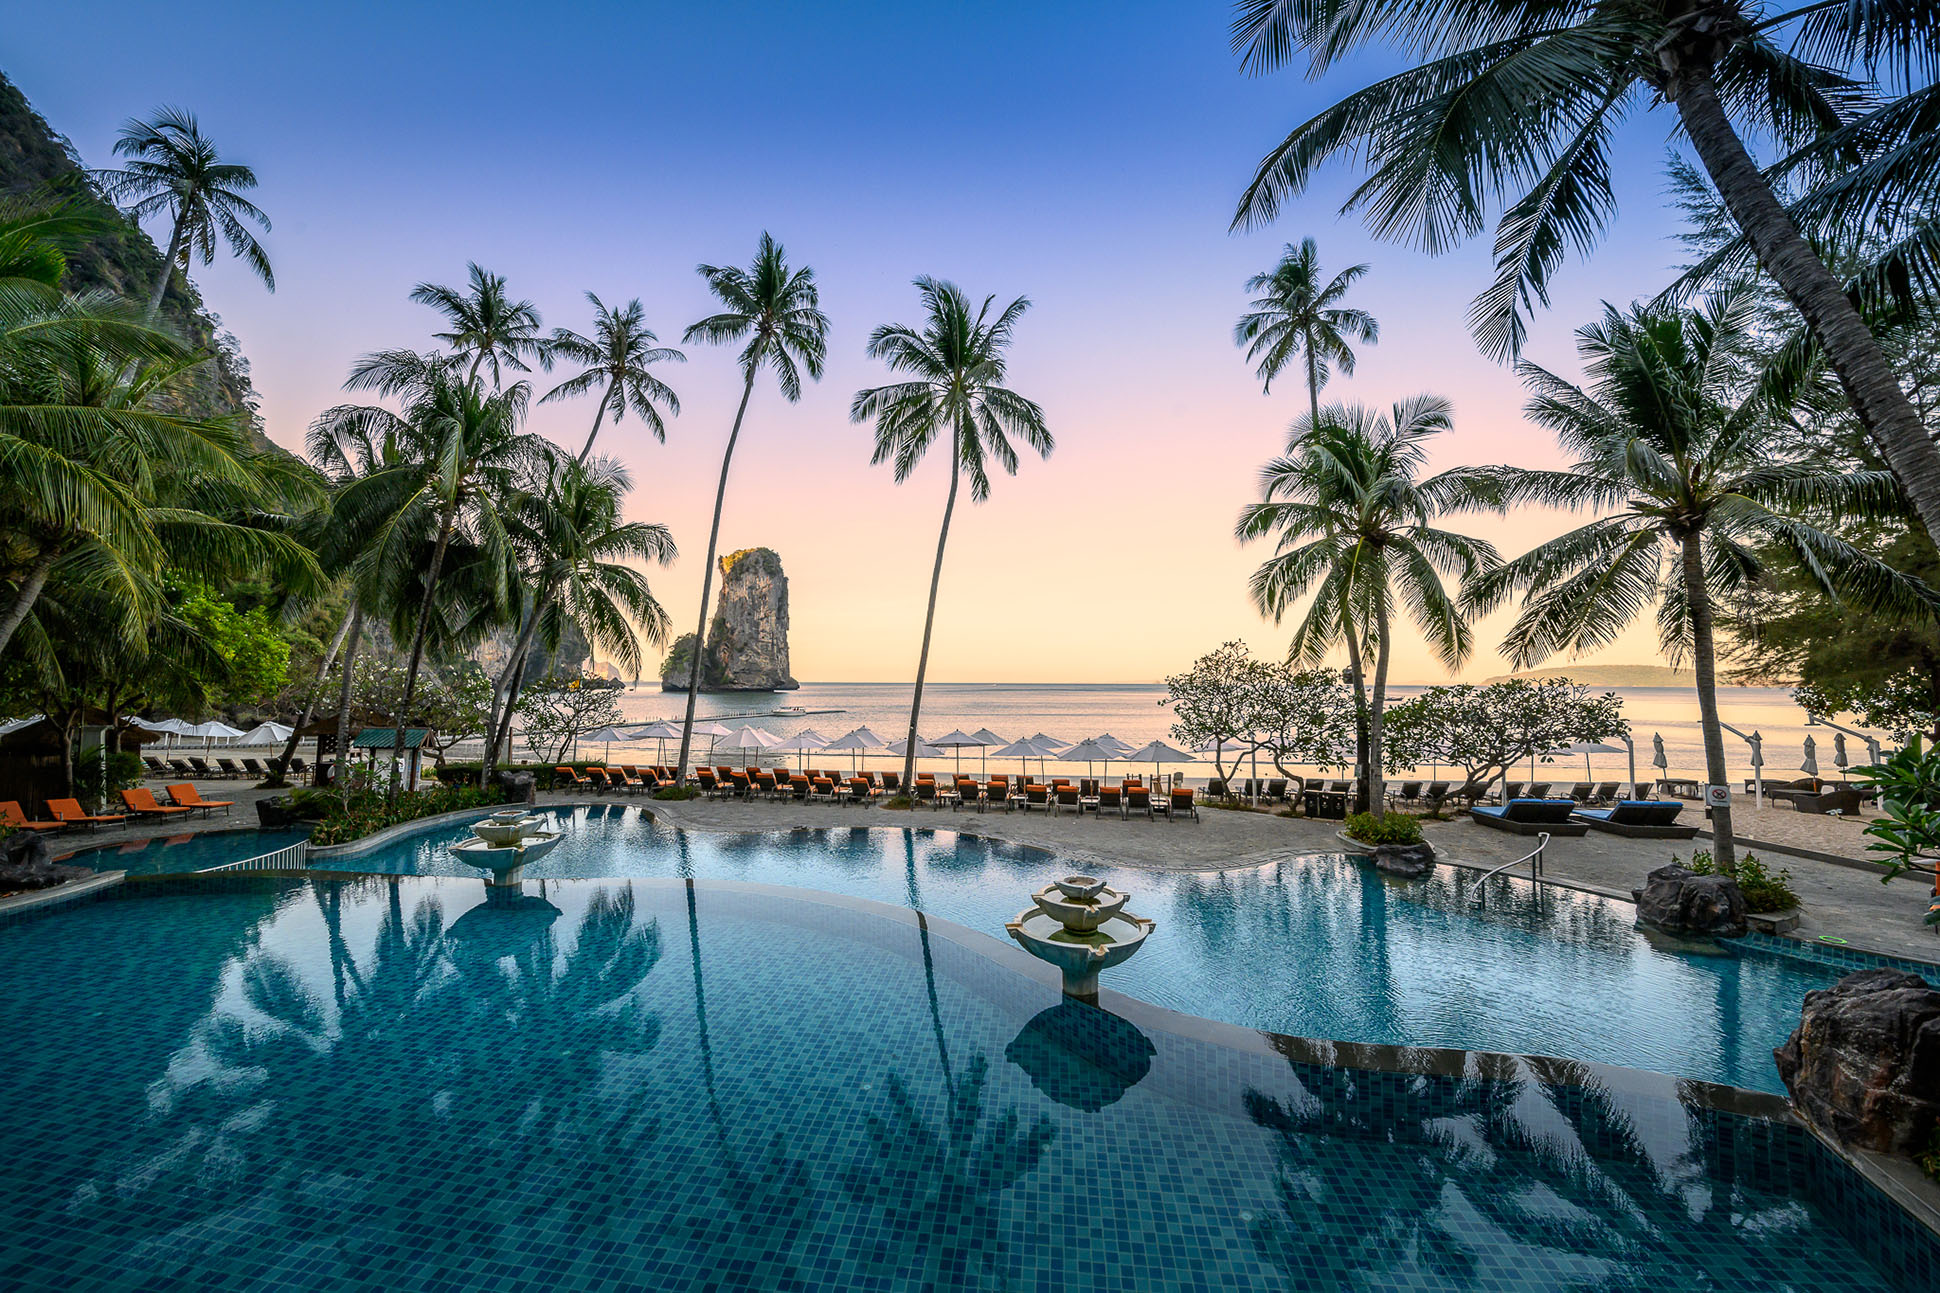 Centara Grand Beach Resort & Villas, Krabi - Go Thai. Be ...